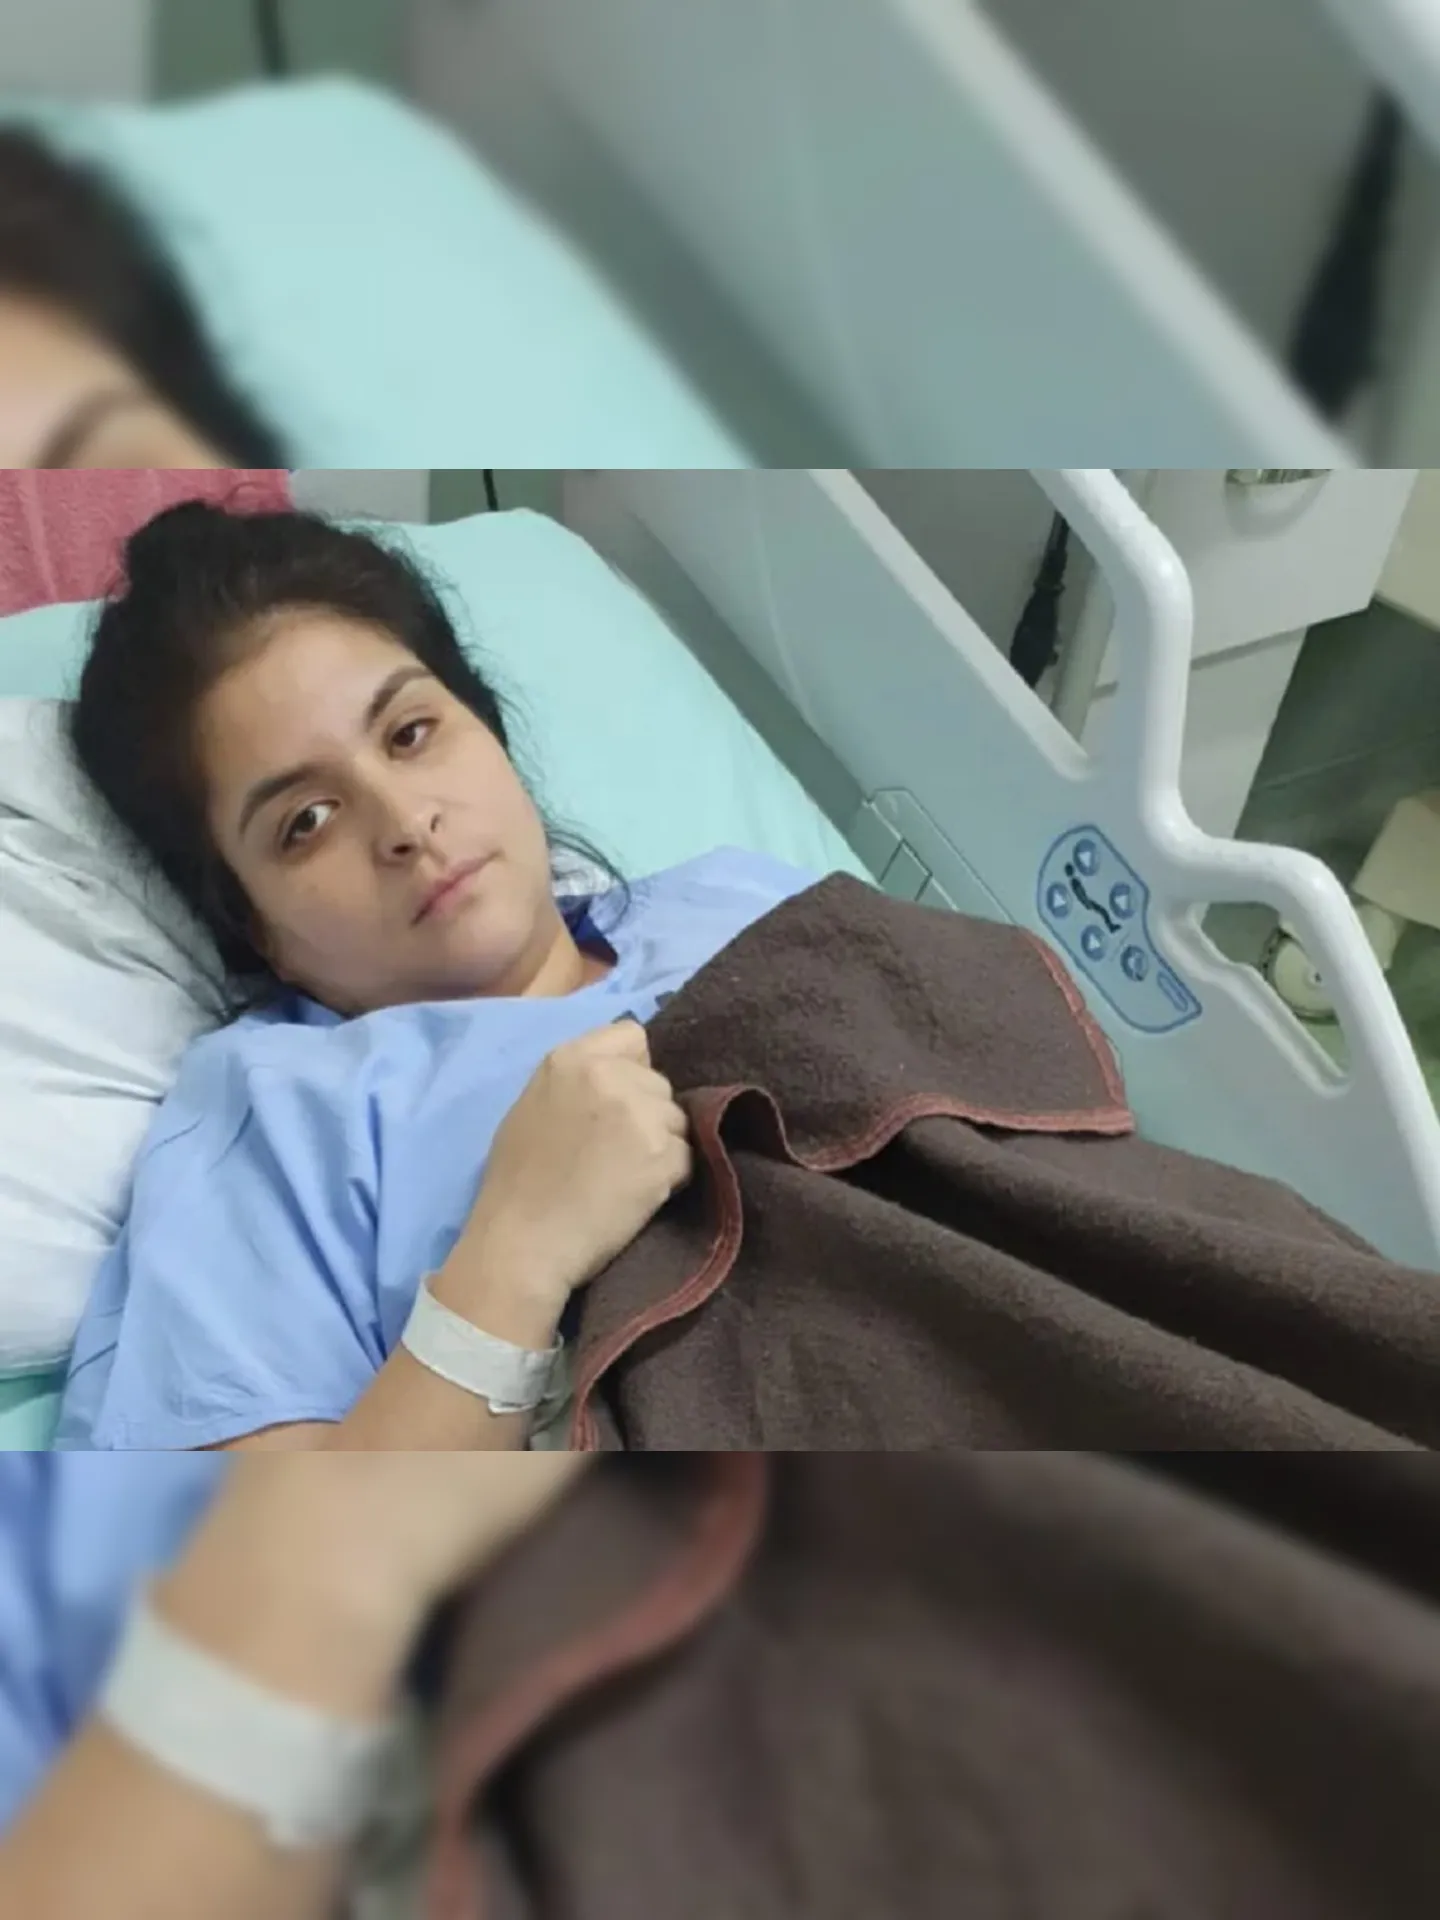 Daiana Chaves em uma cama hospitalar